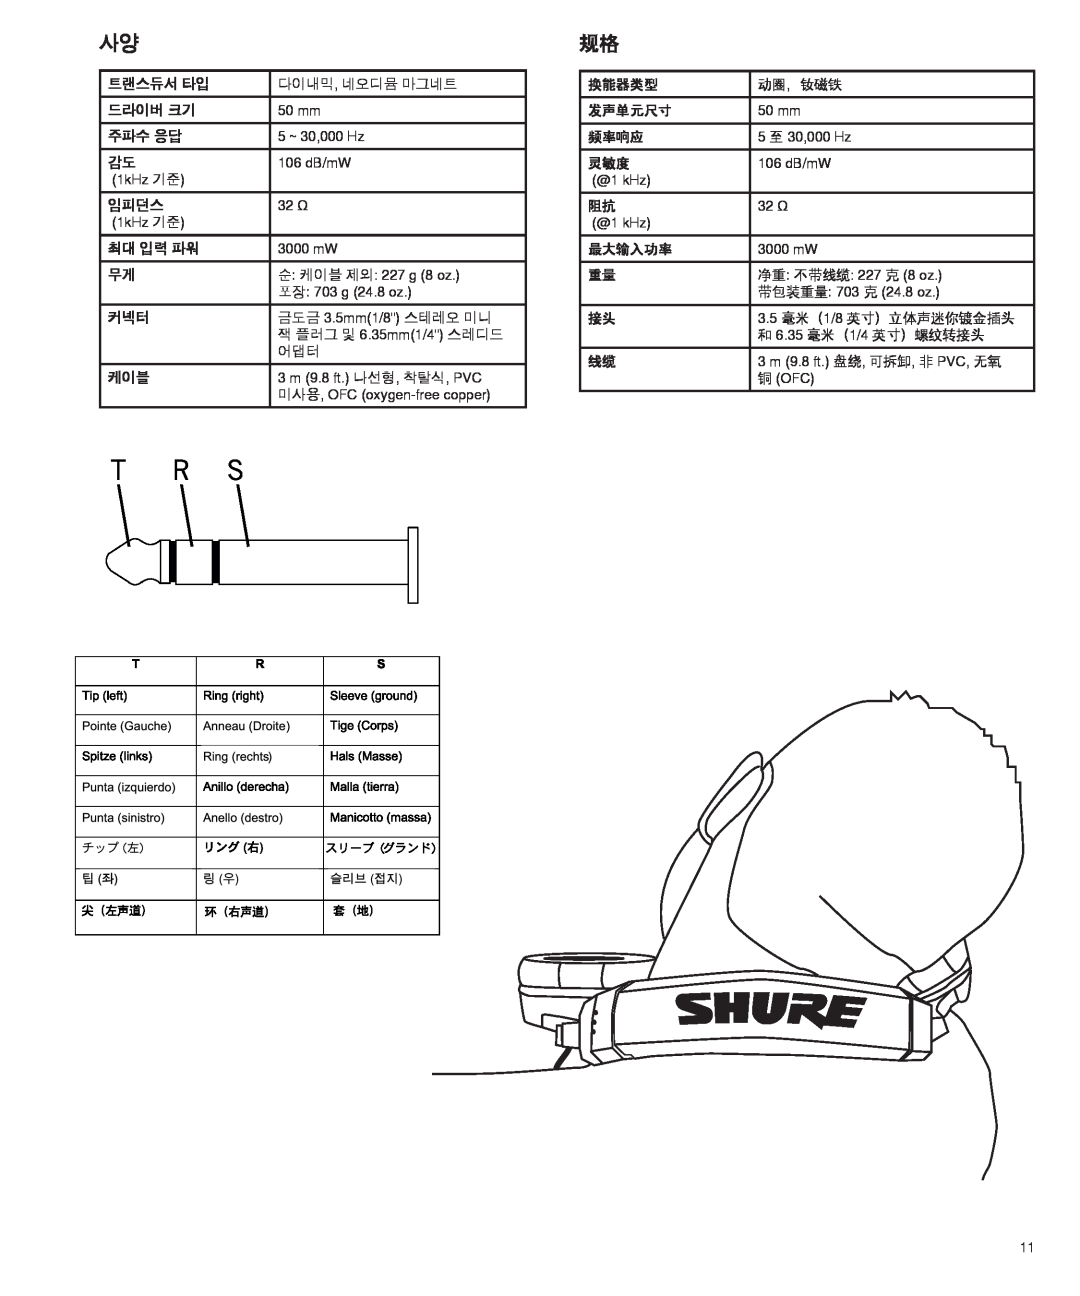 Shure SRH750DJ manual 트랜스듀서 타입, 드라이버 크기, 주파수 응답, 임피던스, 최대 입력 파워, 换能器类型, 发声单元尺寸, 频率响应, 最大输入功率 